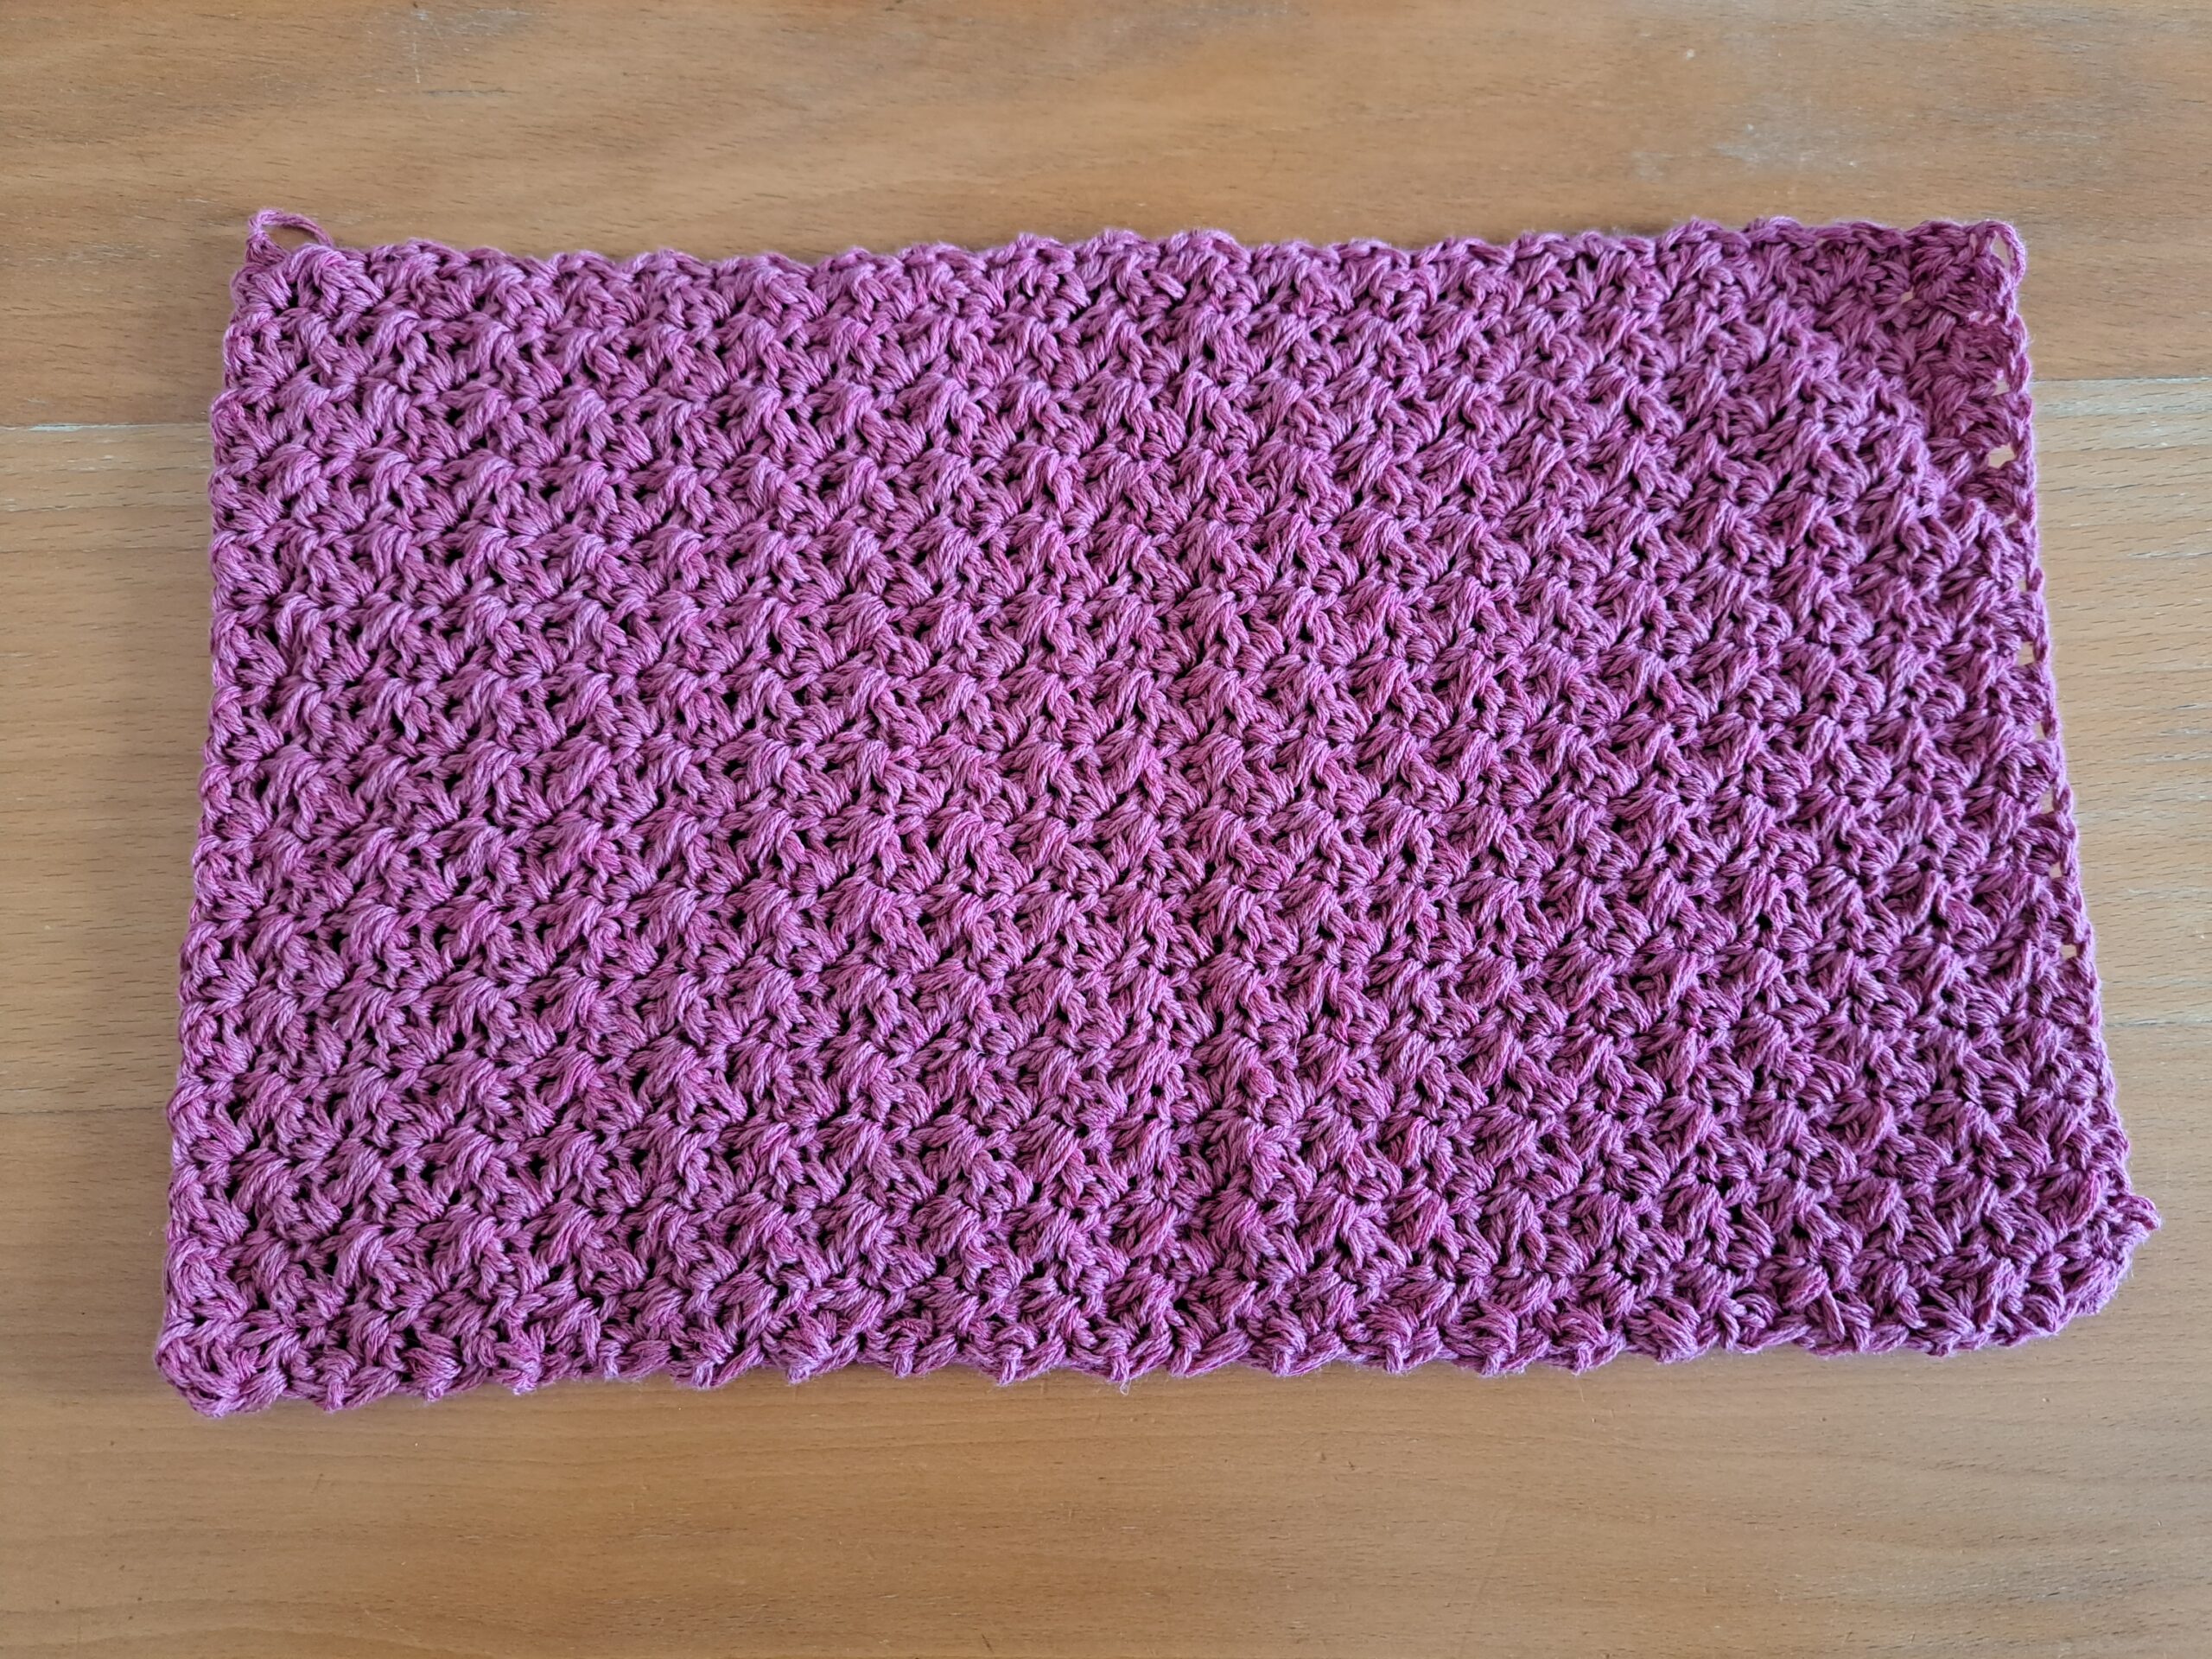 Crochet rectangle